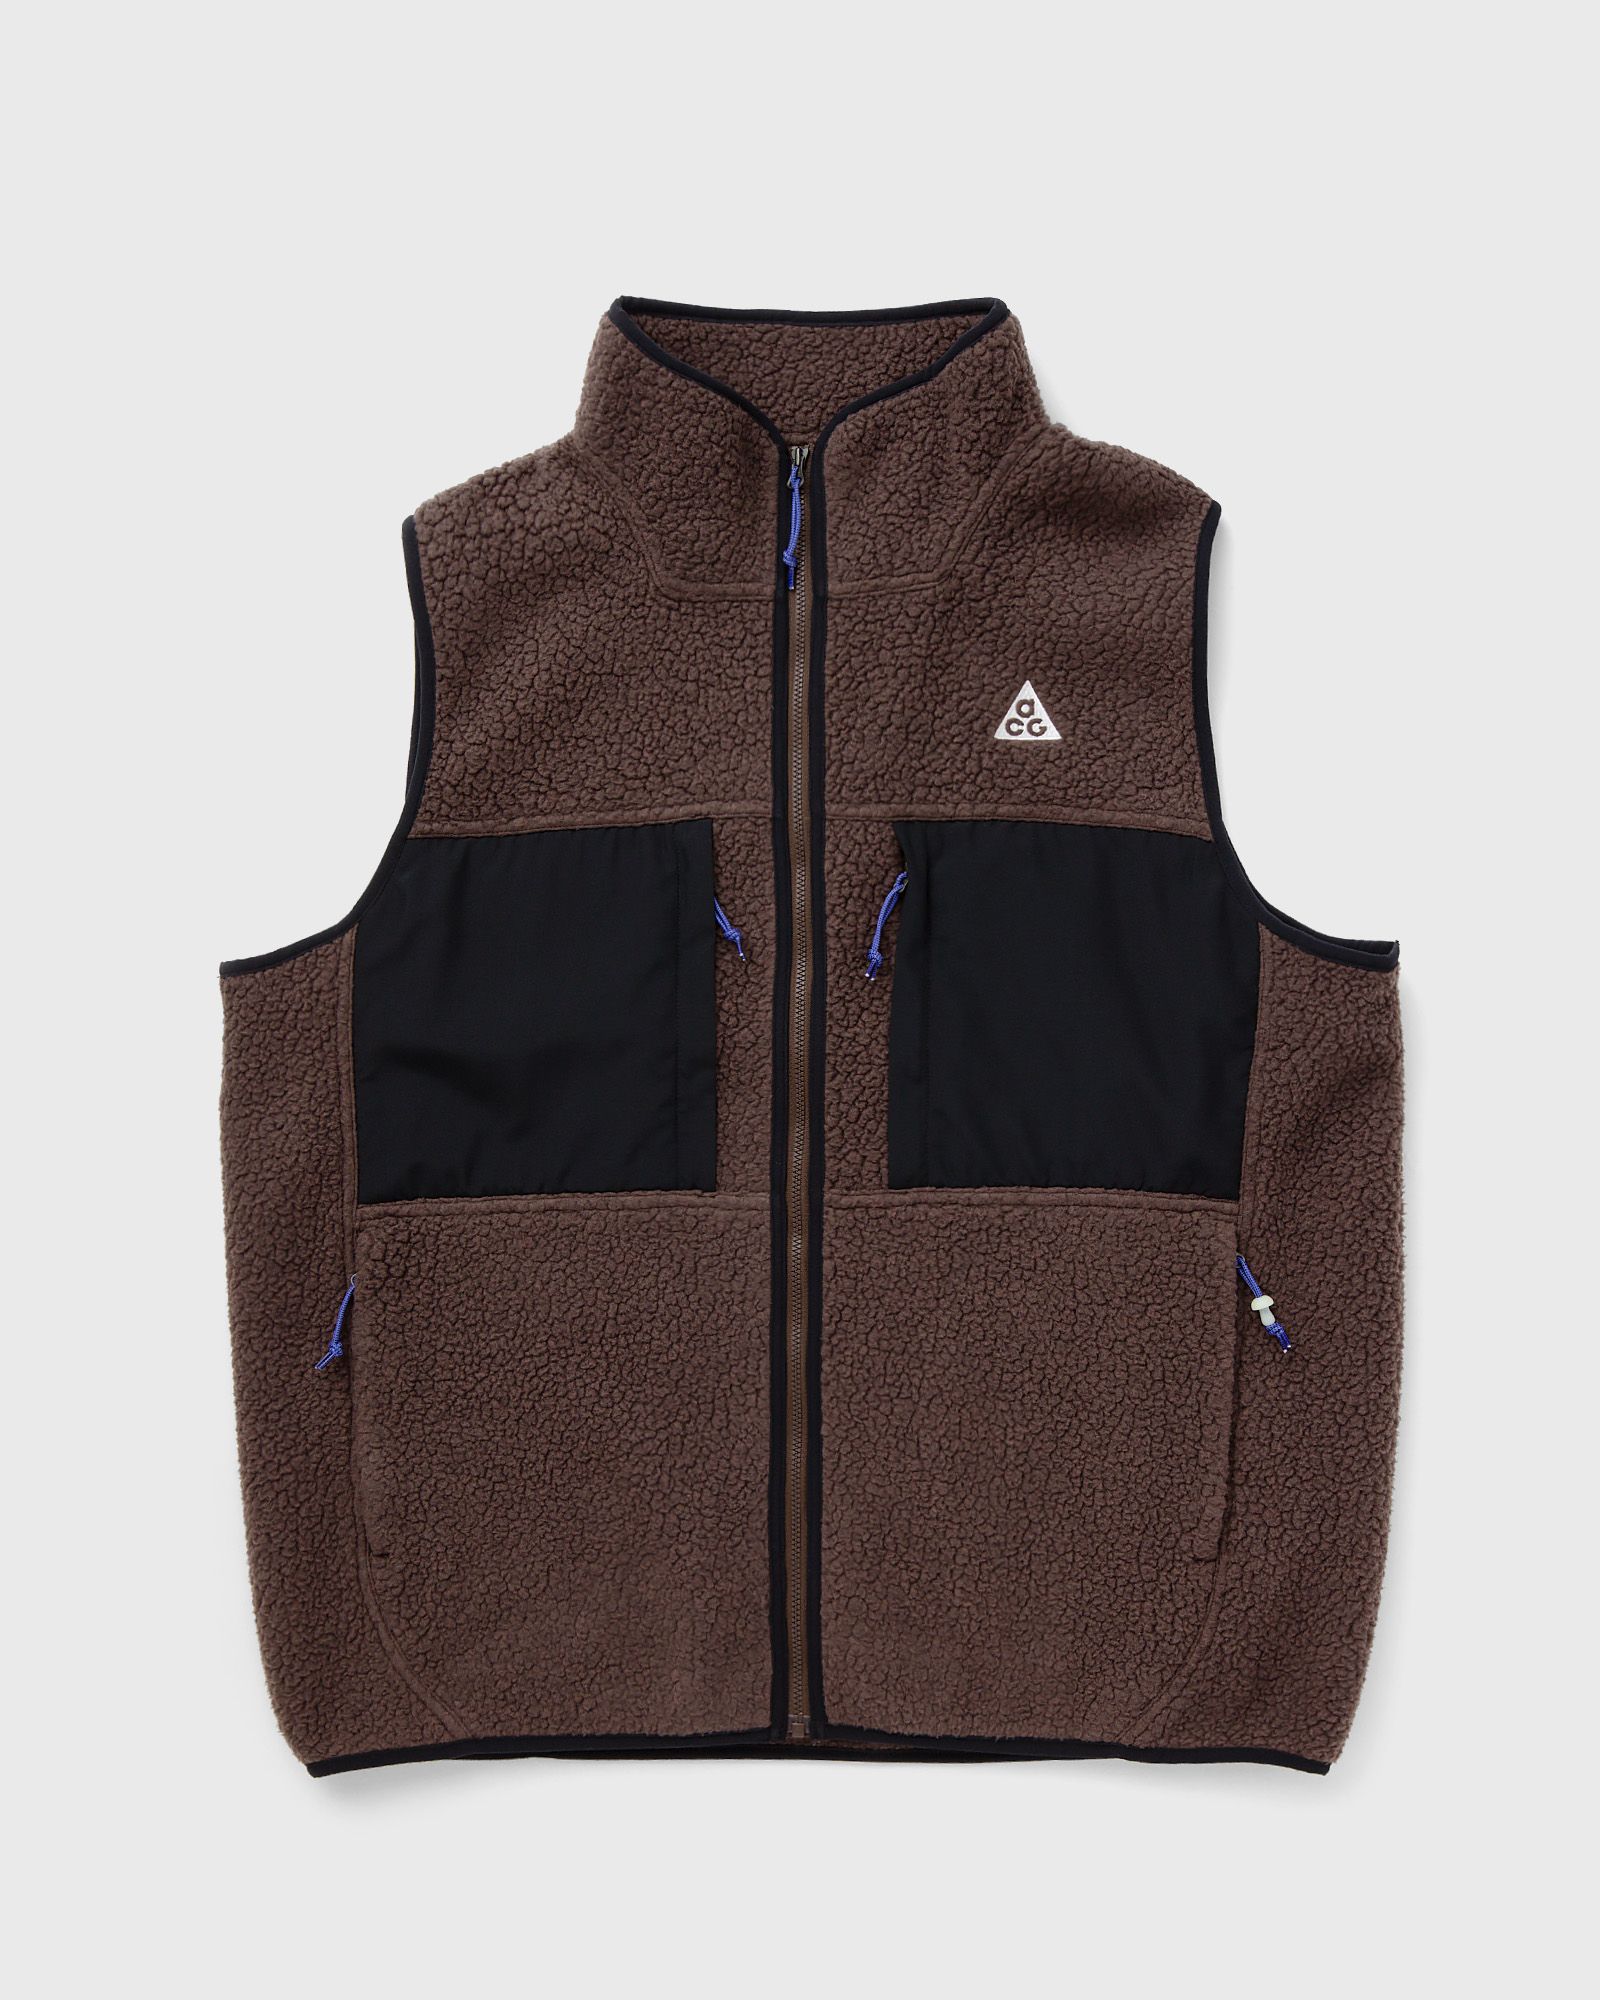 Nike - acg arctic wolf vest men vests brown in größe:xxl